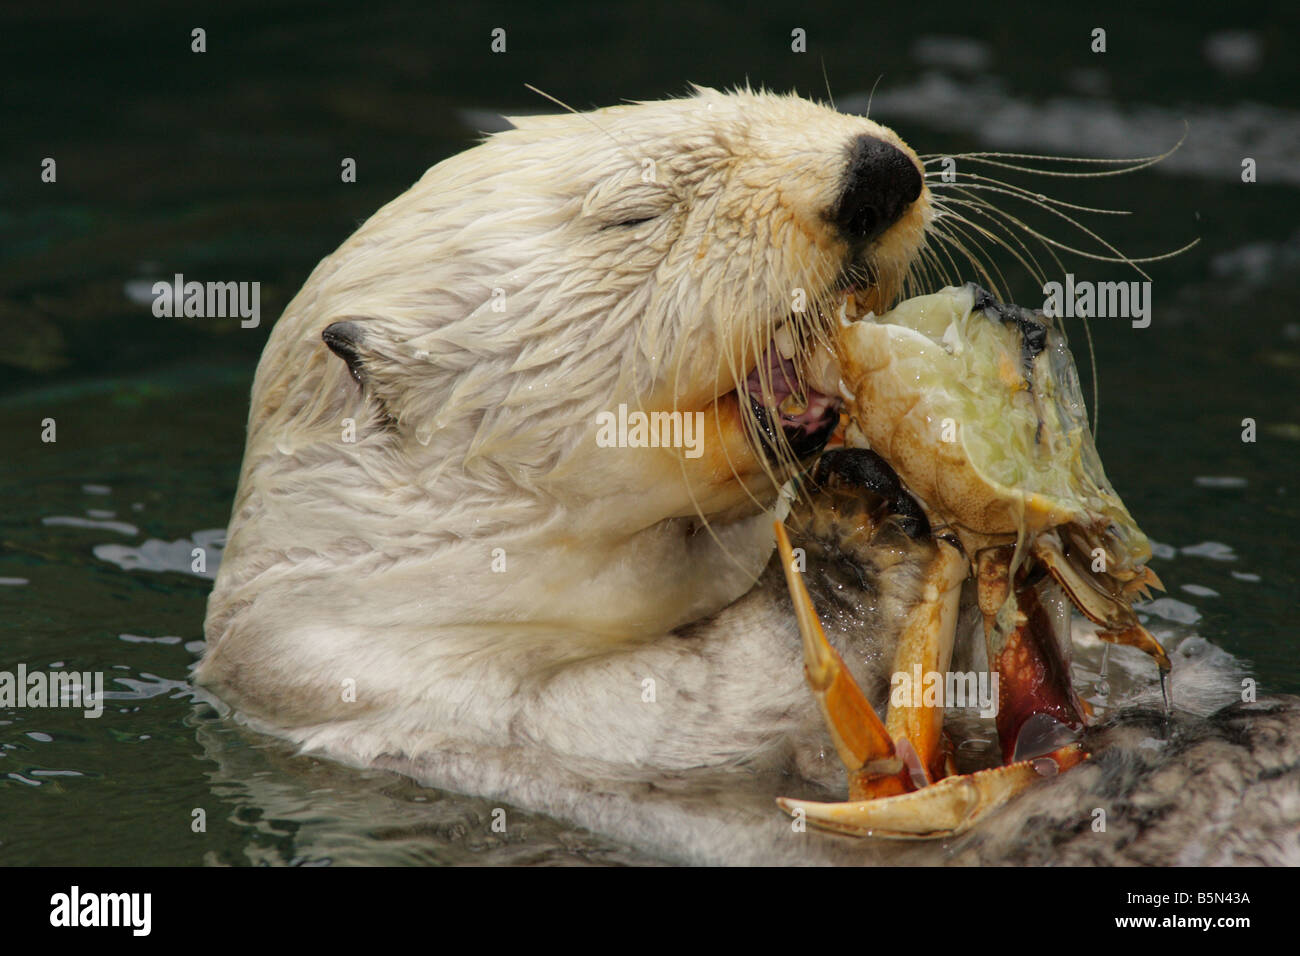 Sea otter eating crab Note Captive subject Stock Photo